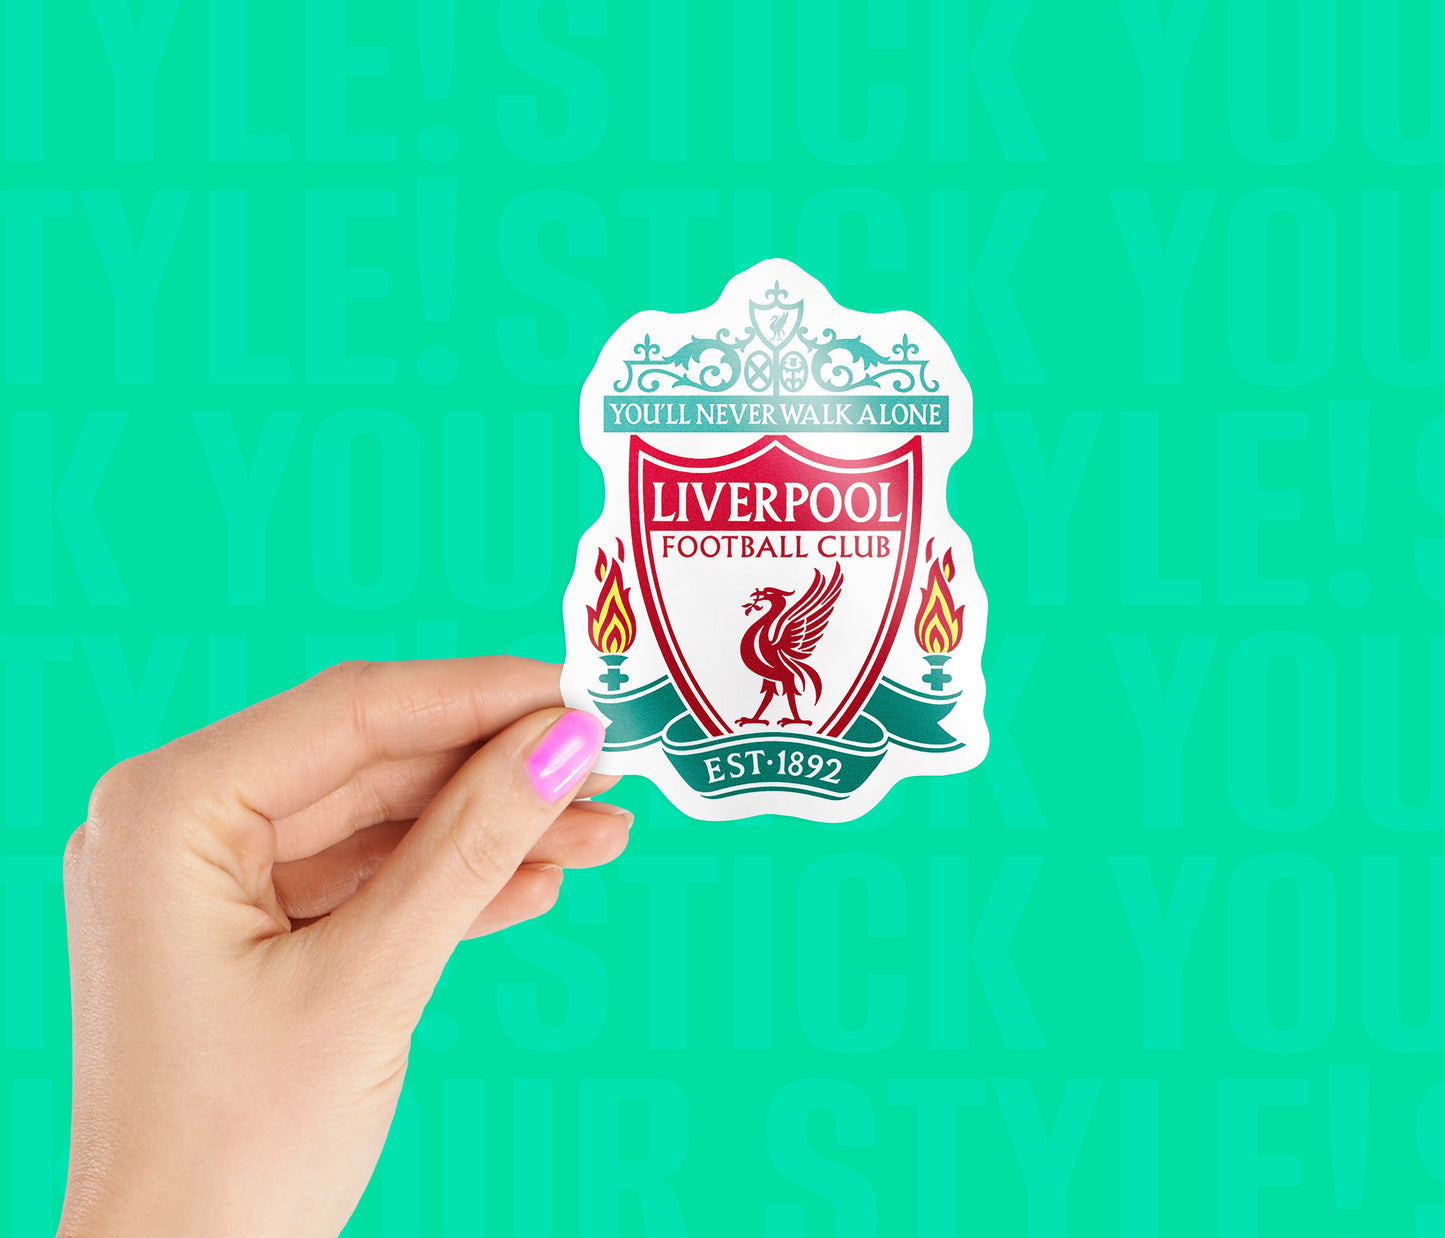 Liverpool Football Club Magnetic Sticker